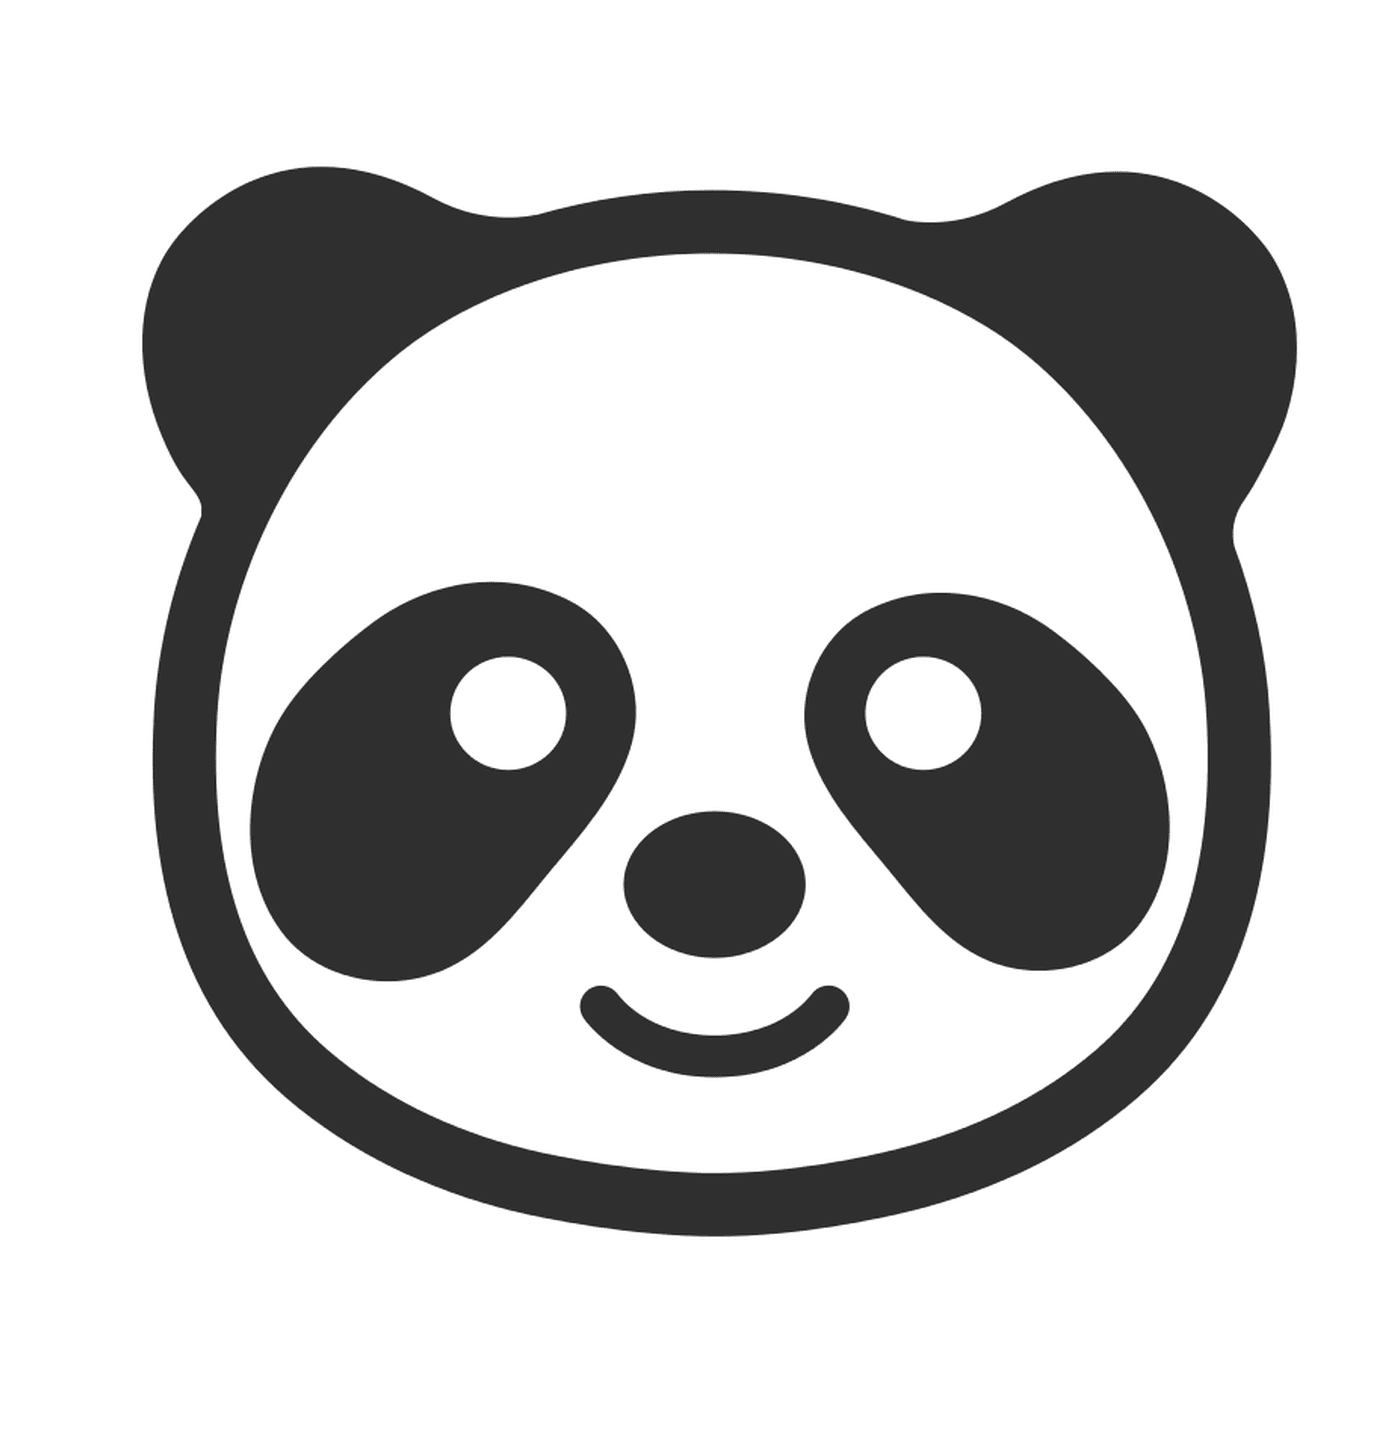   Un panda 